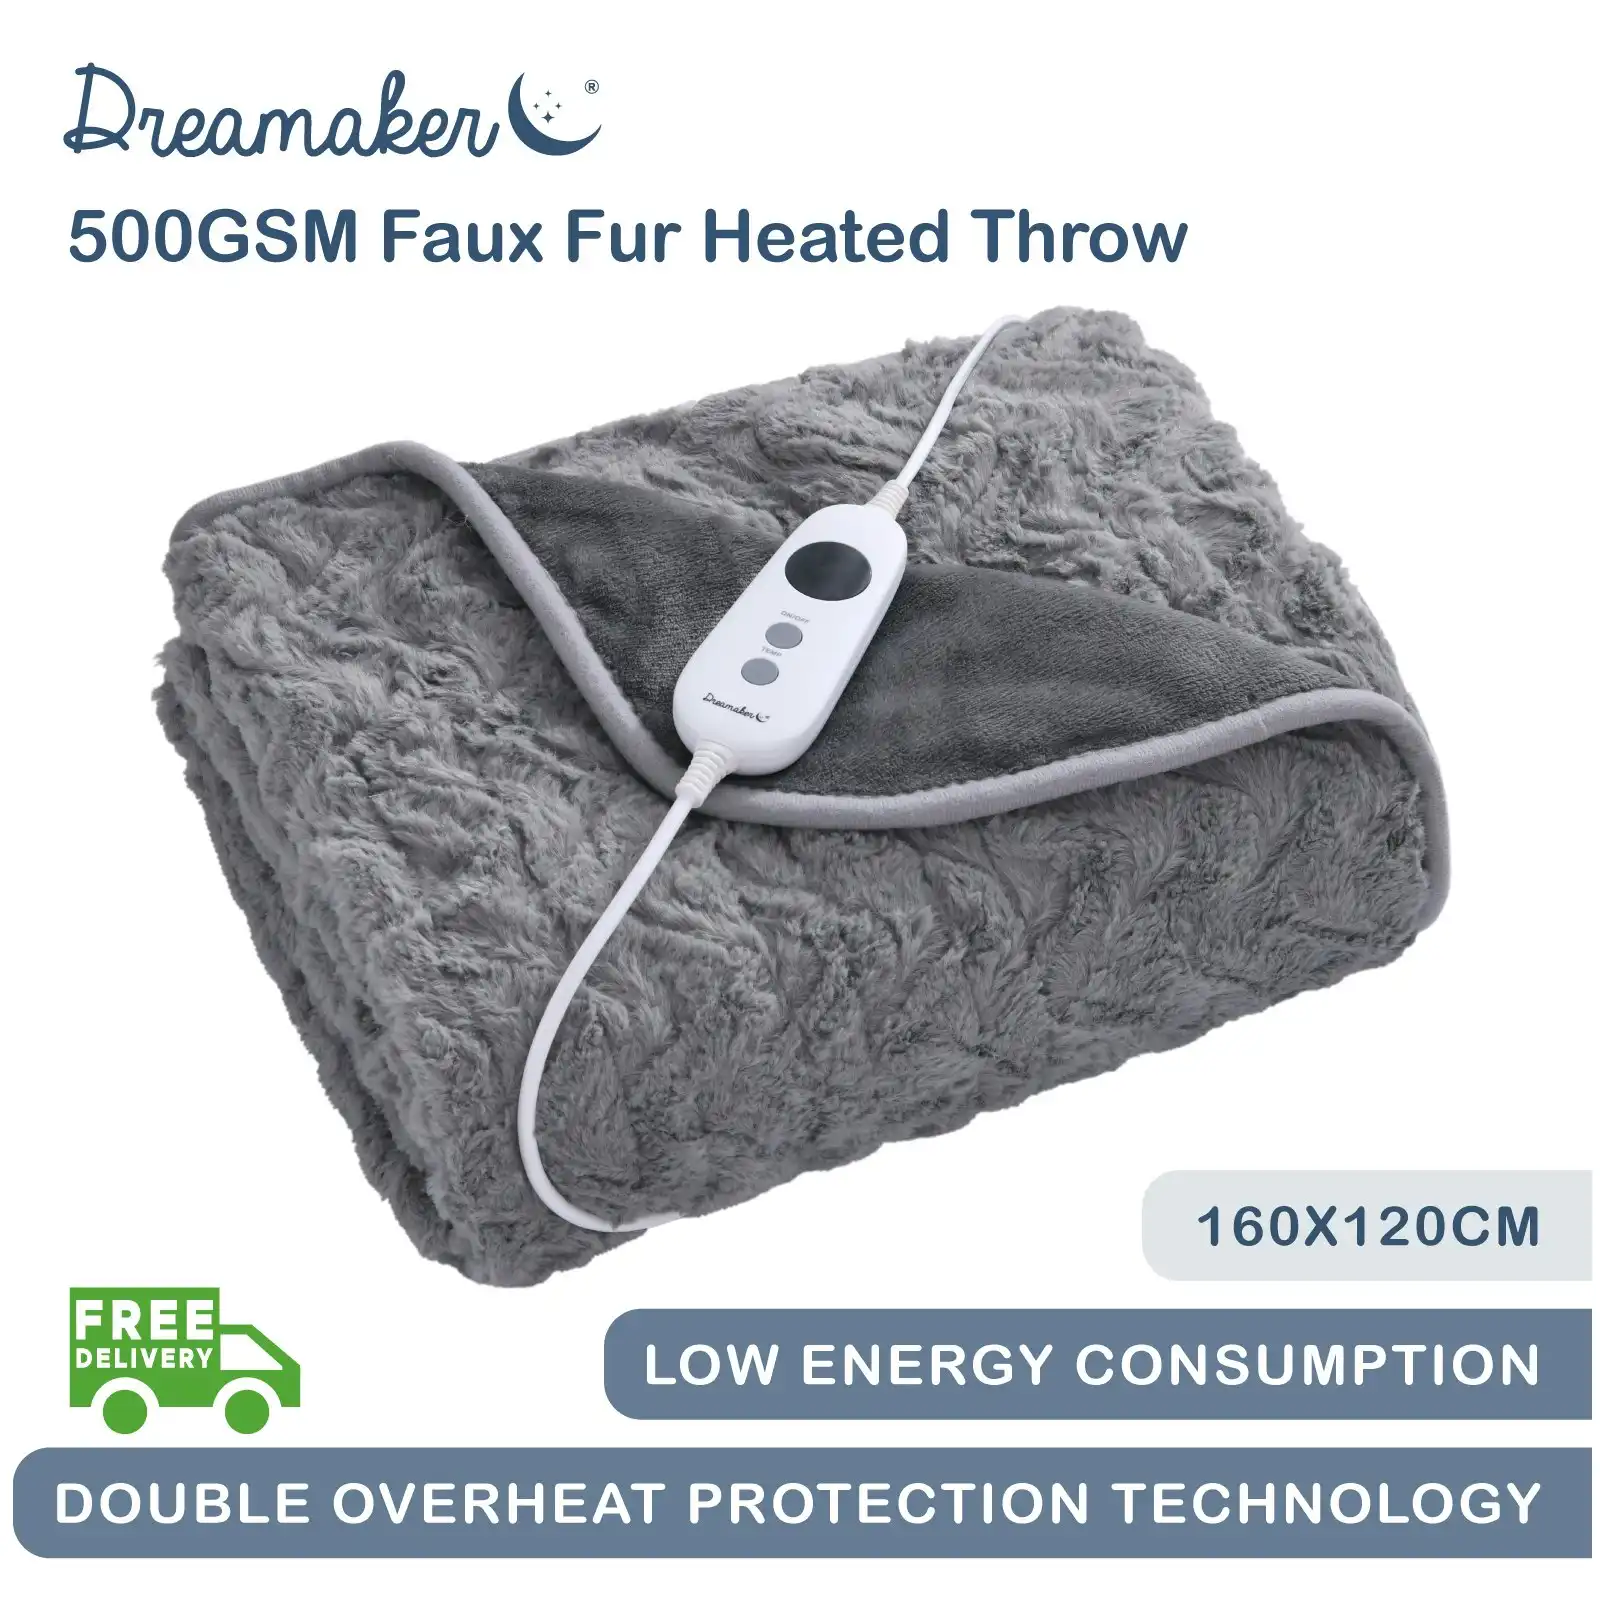 Dreamaker 500Gsm Faux Fur Heated Throw Silver - 160x120cm